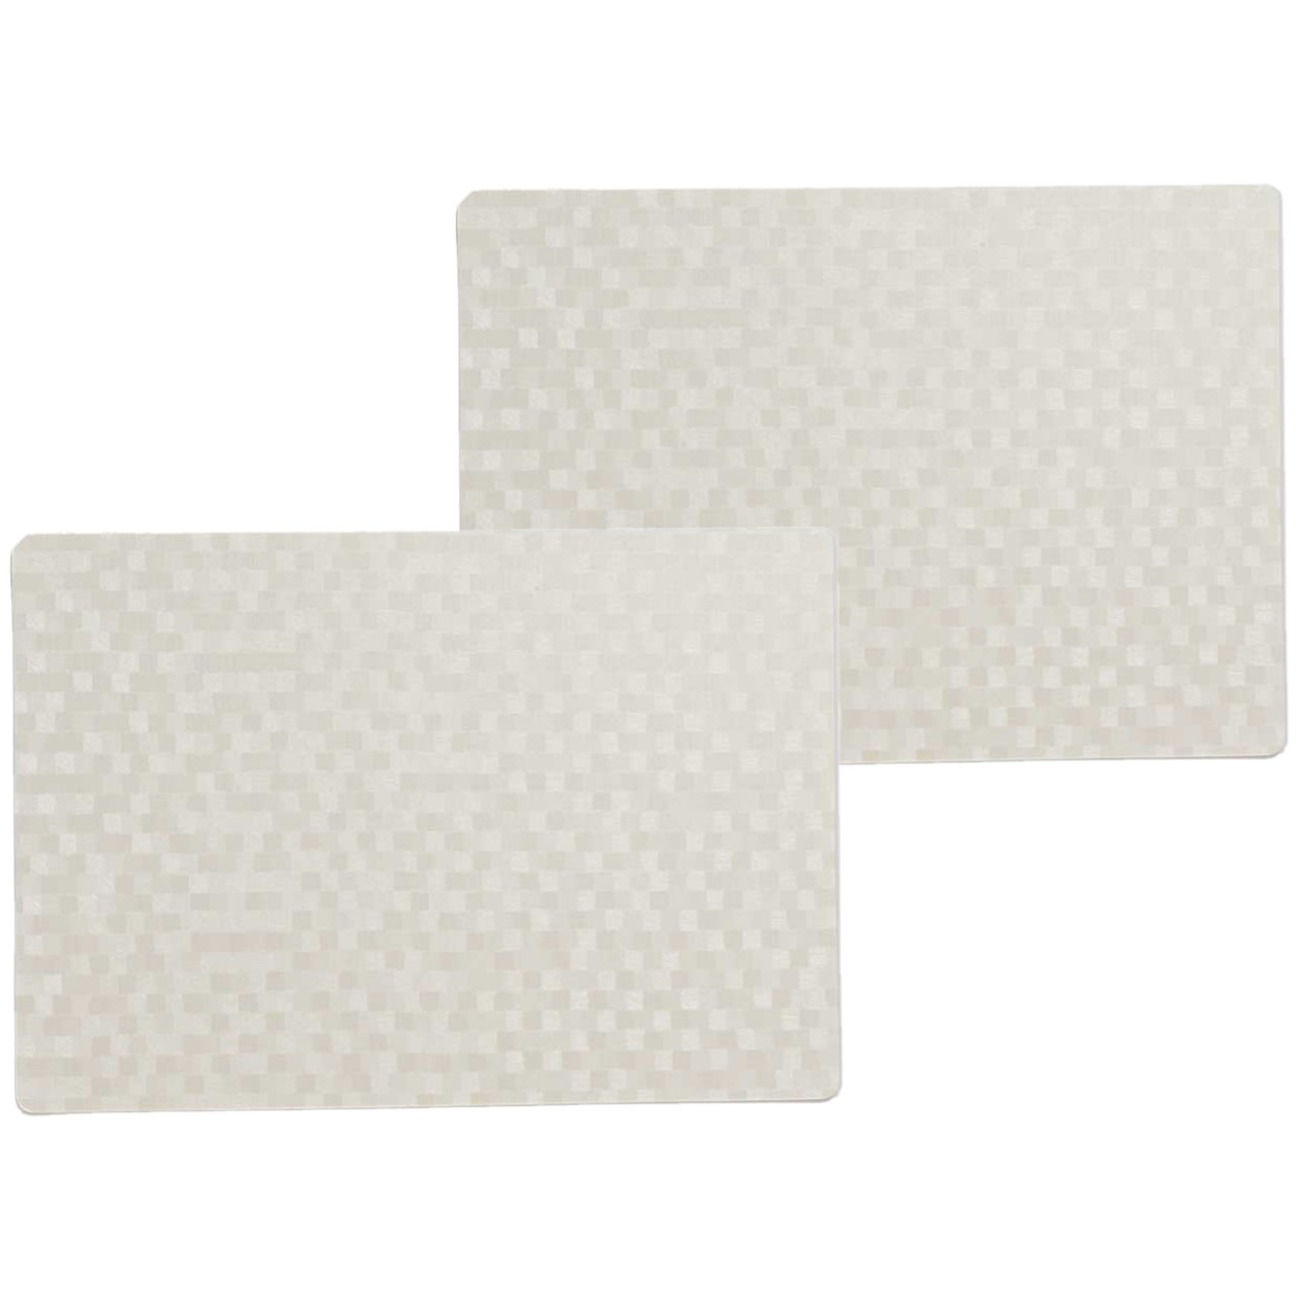 Wicotex 8x stuks stevige luxe Tafel placemats Stones wit 30 x 43 cm -